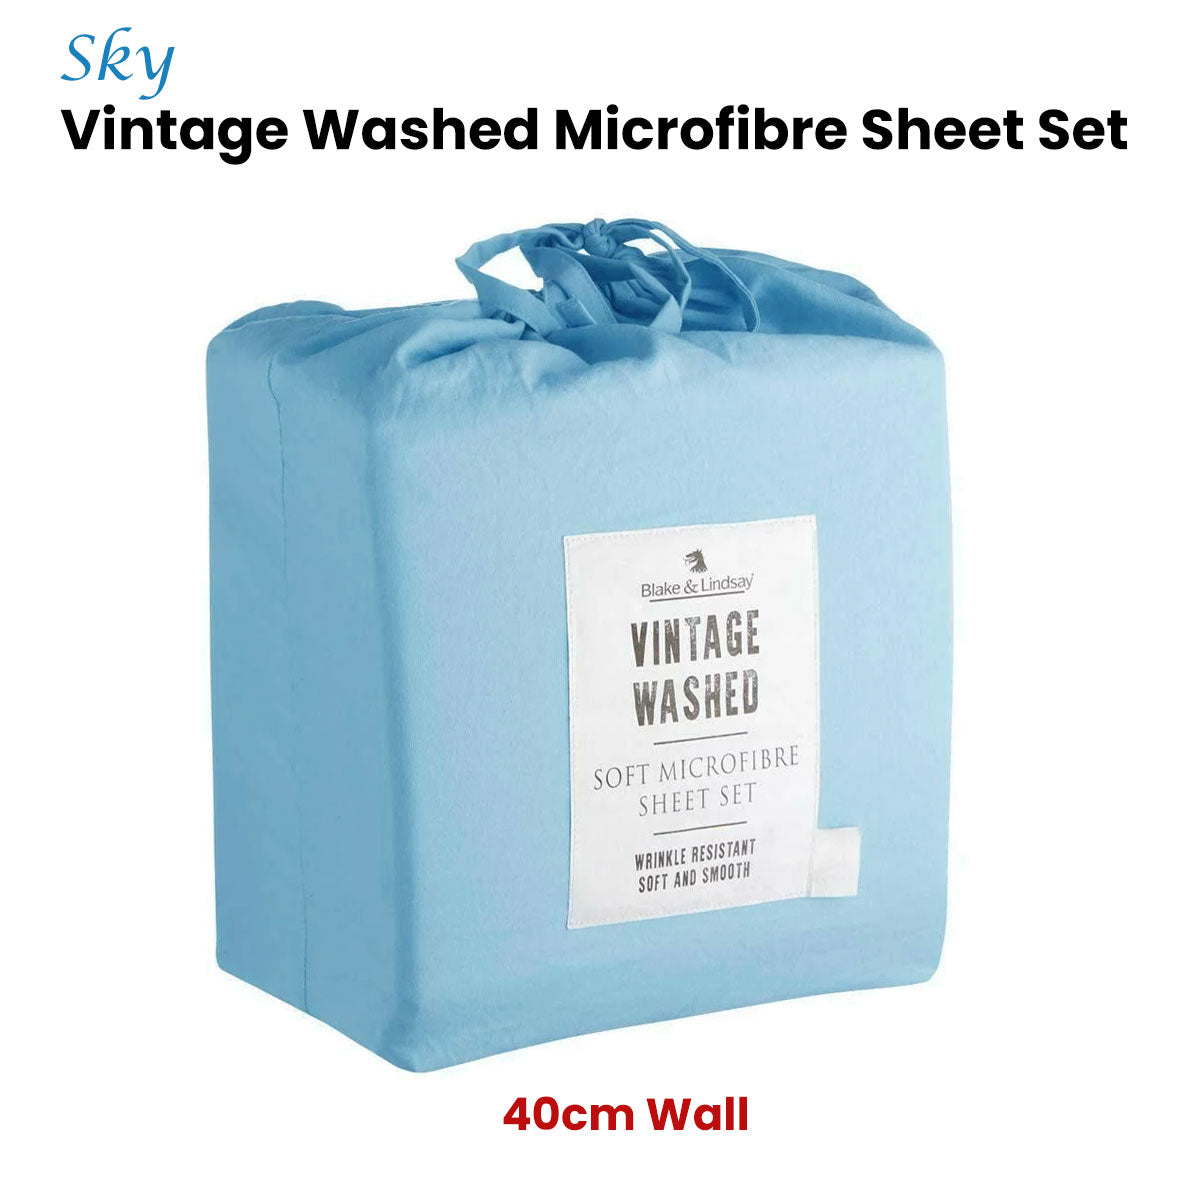 Blake & Lindsay Sky Vintage Washed Microfibre Sheet Set 40cm Wall Queen